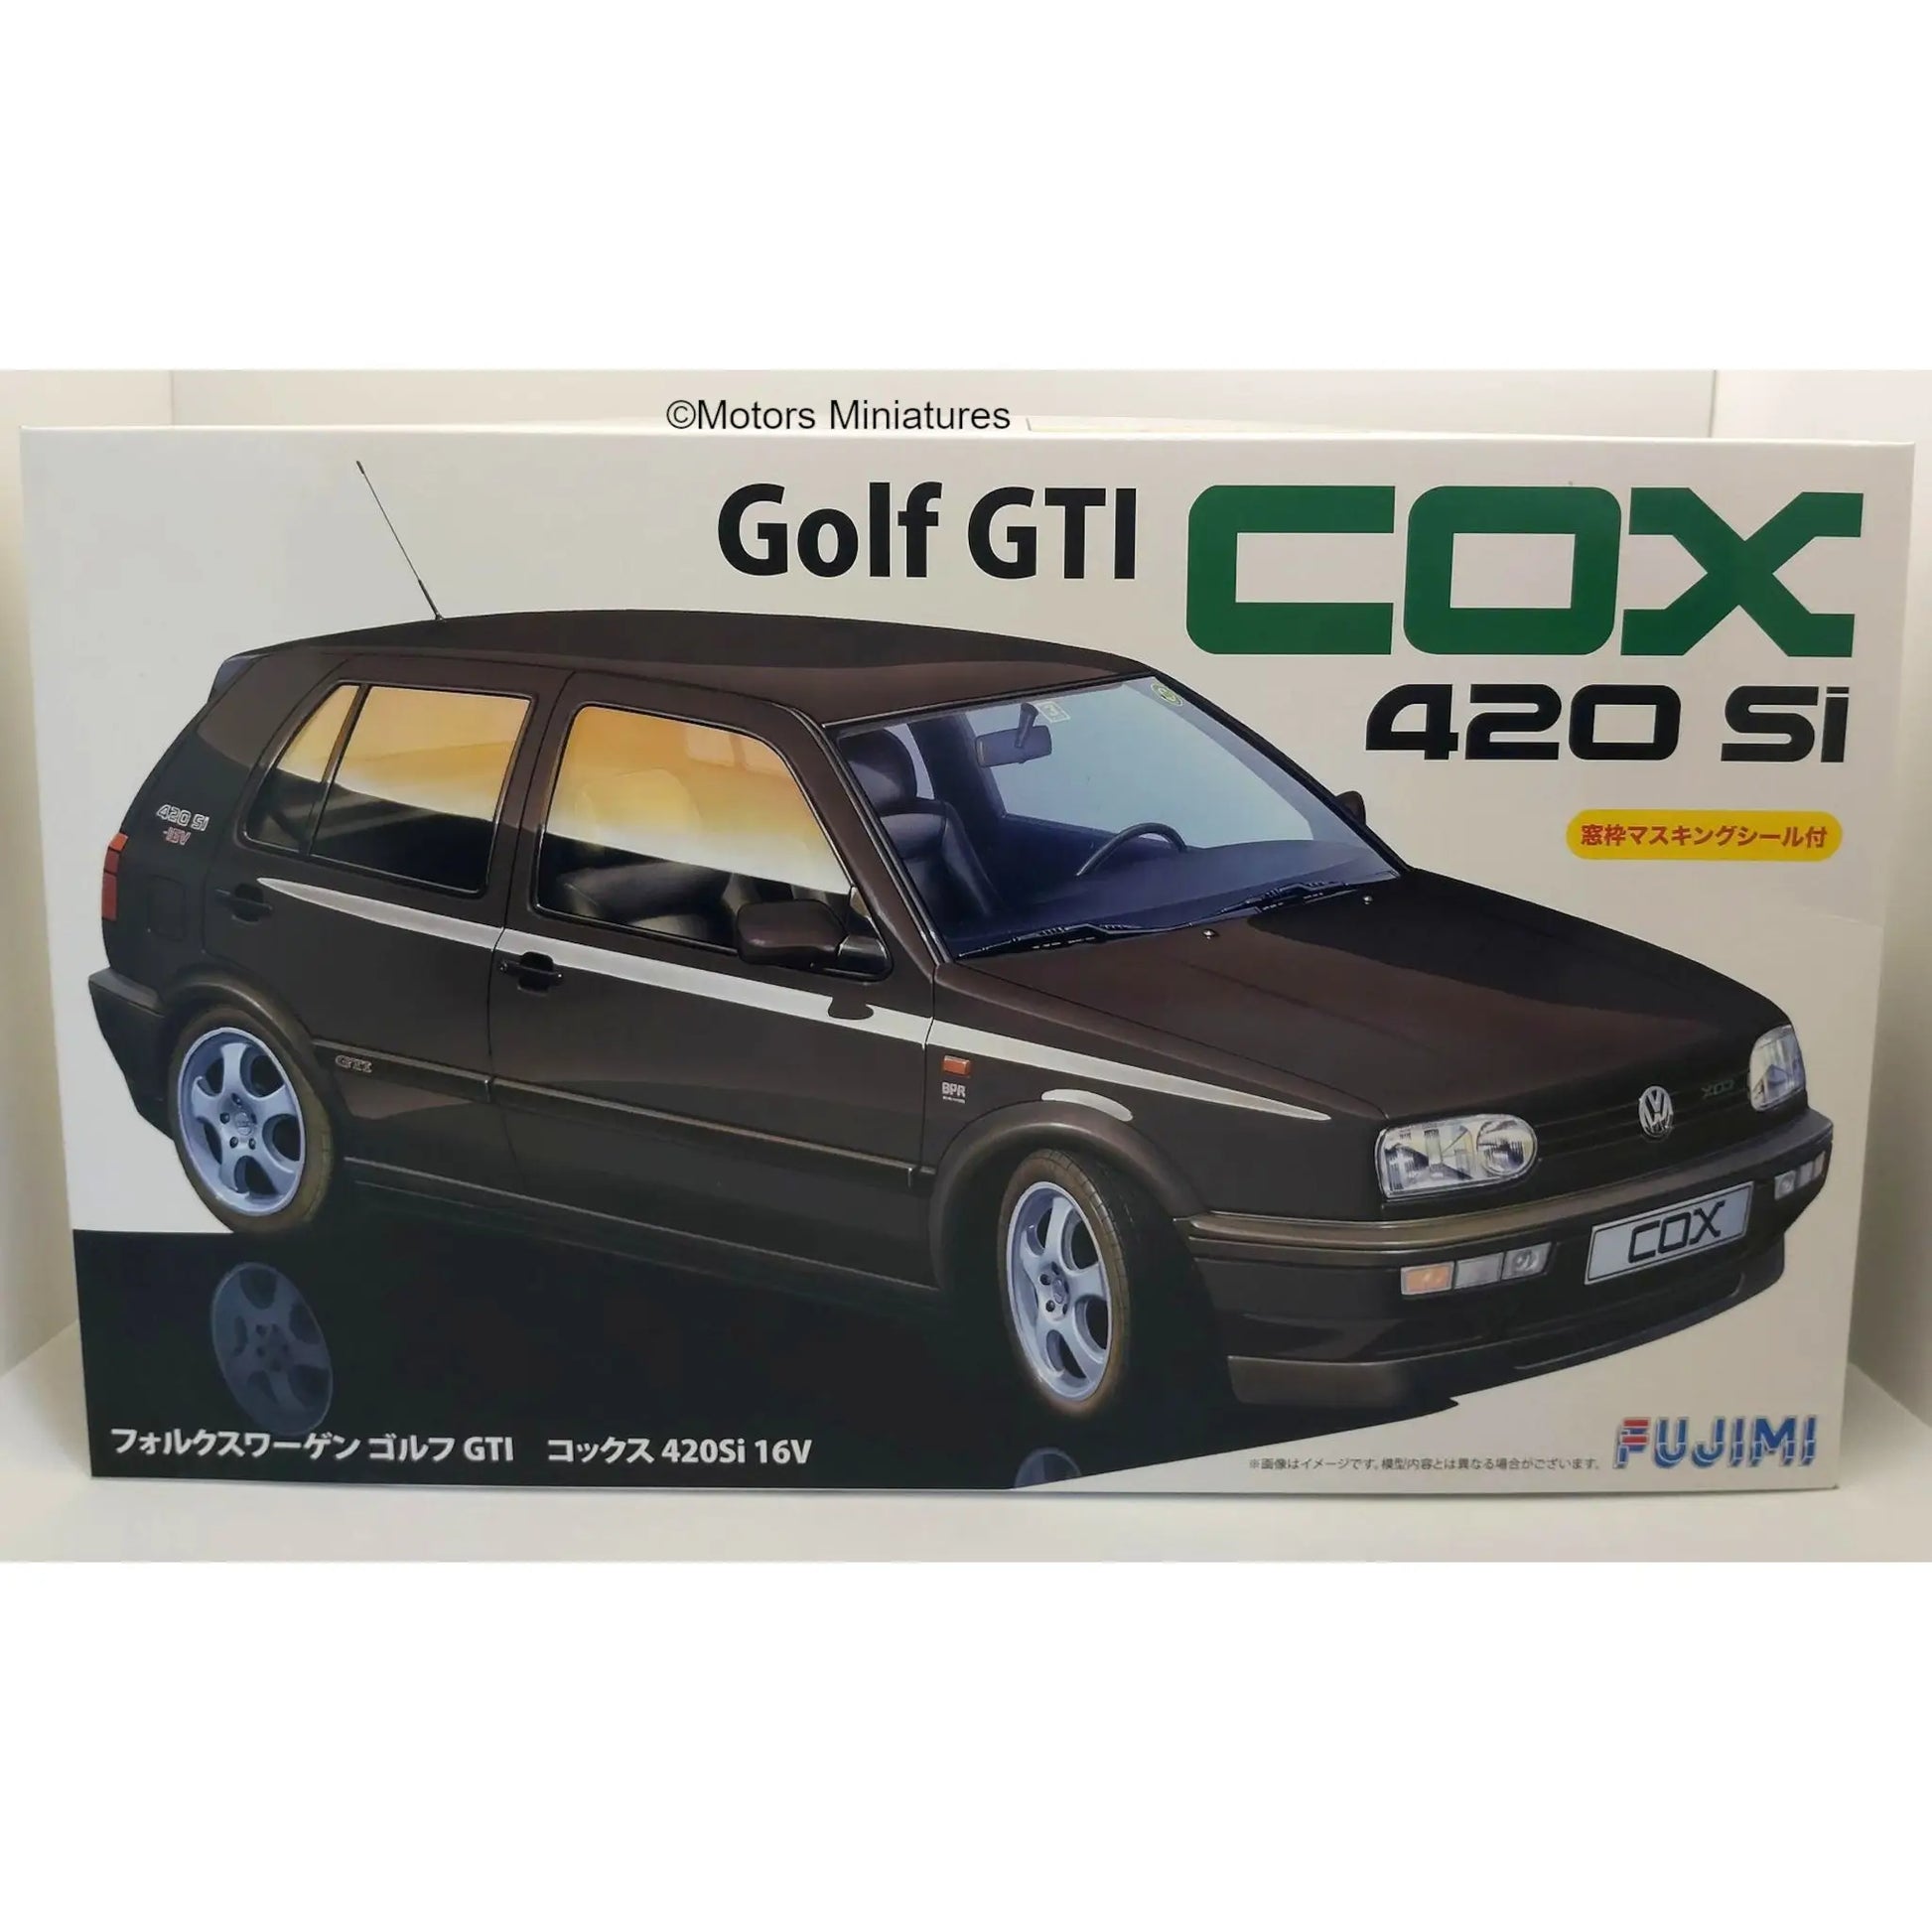 Volkswagen Golf GTI Cox 420 Si Modelkit #RS47 Fujimi 1/24 | Motors Miniatures